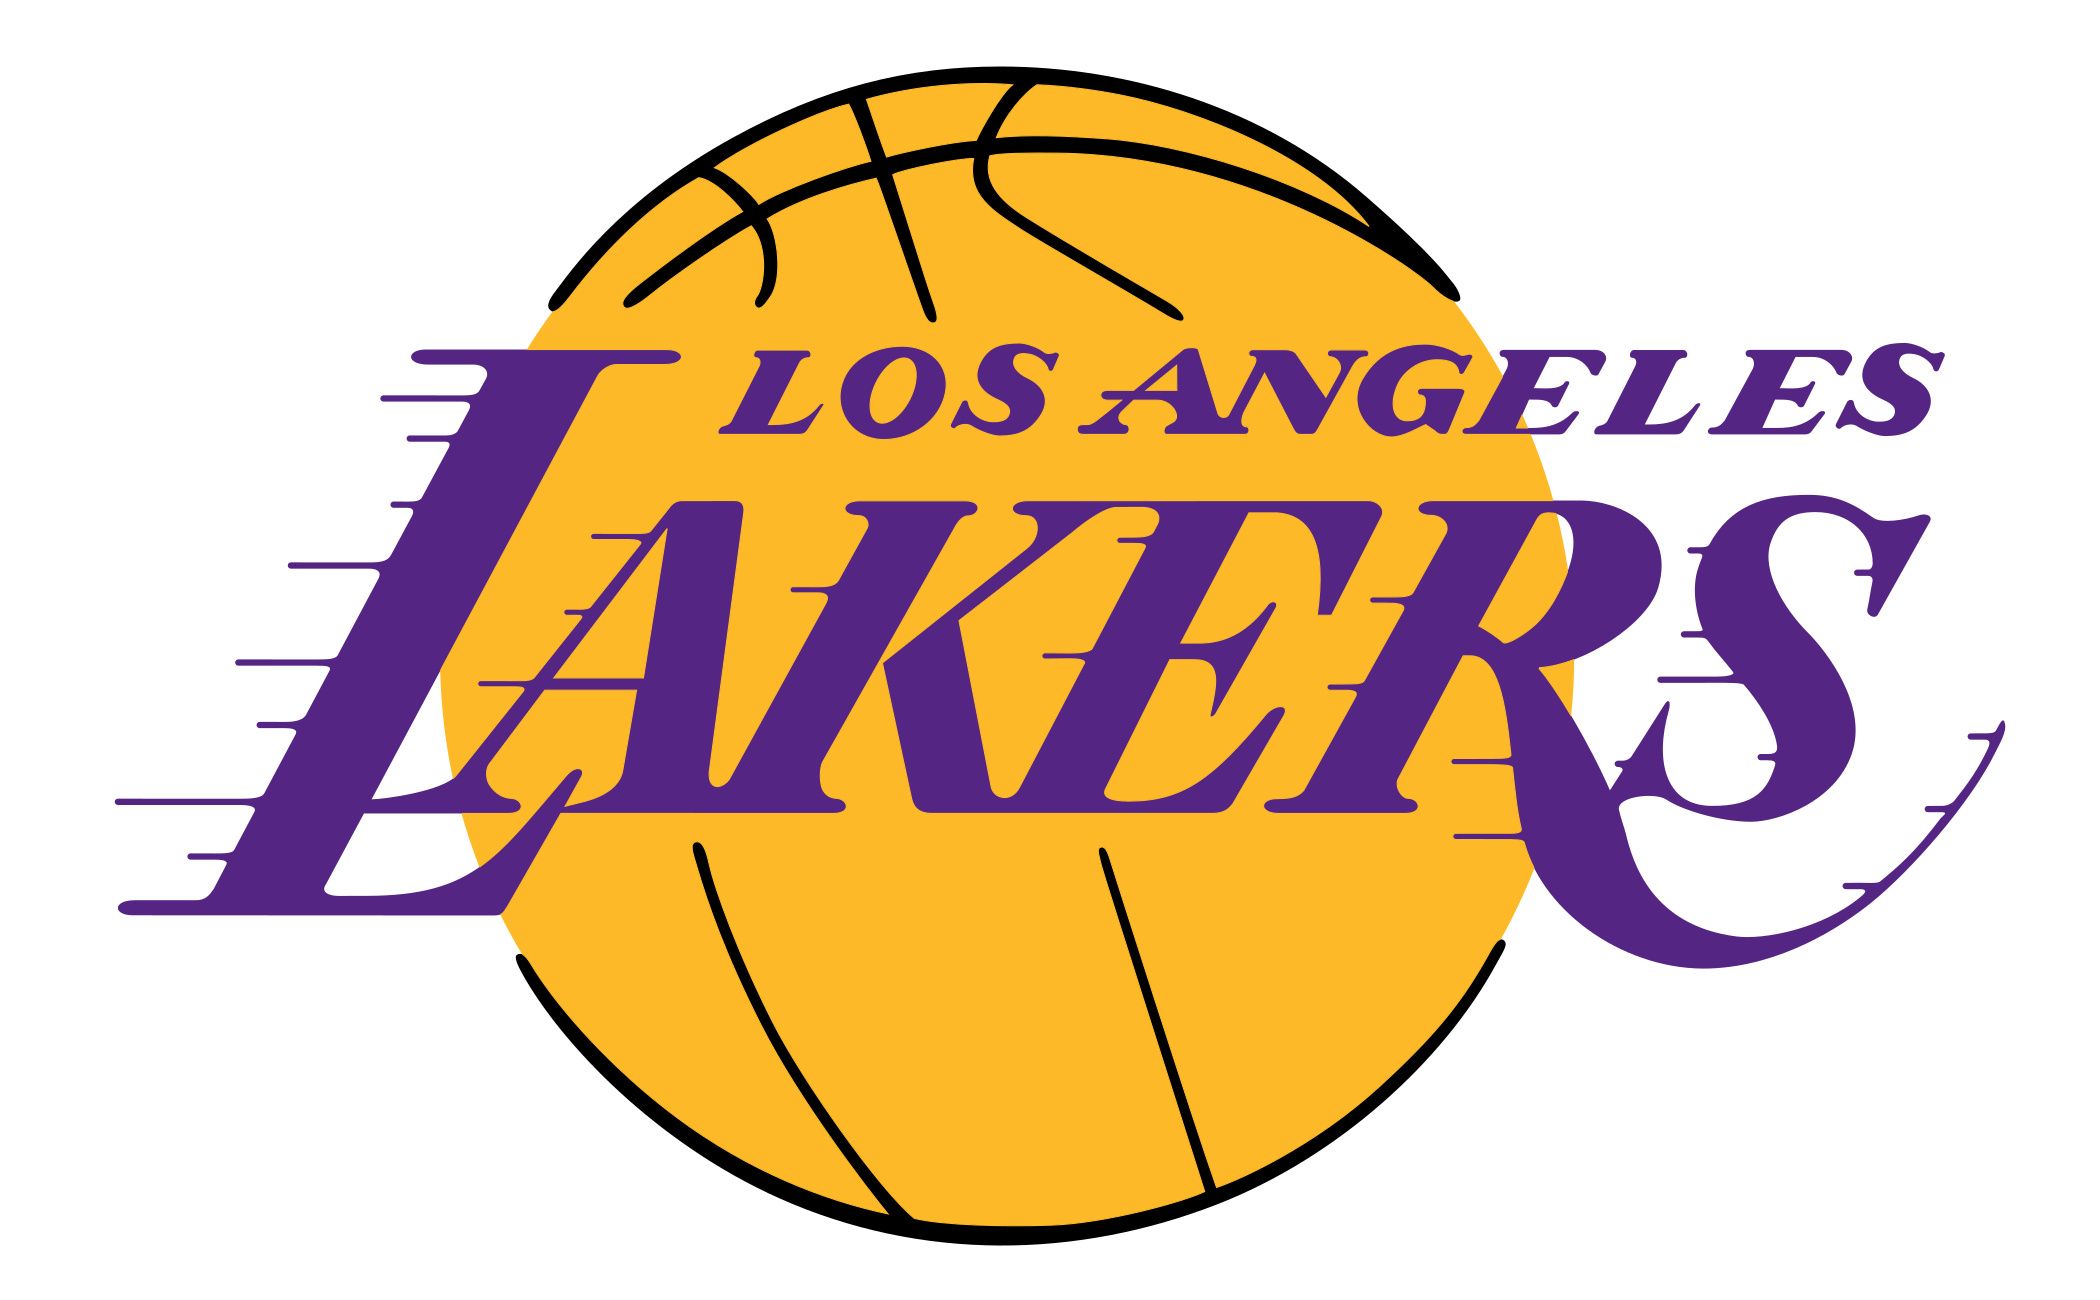 los angeles lakers logo 1 - Los Angeles Lakers Logo